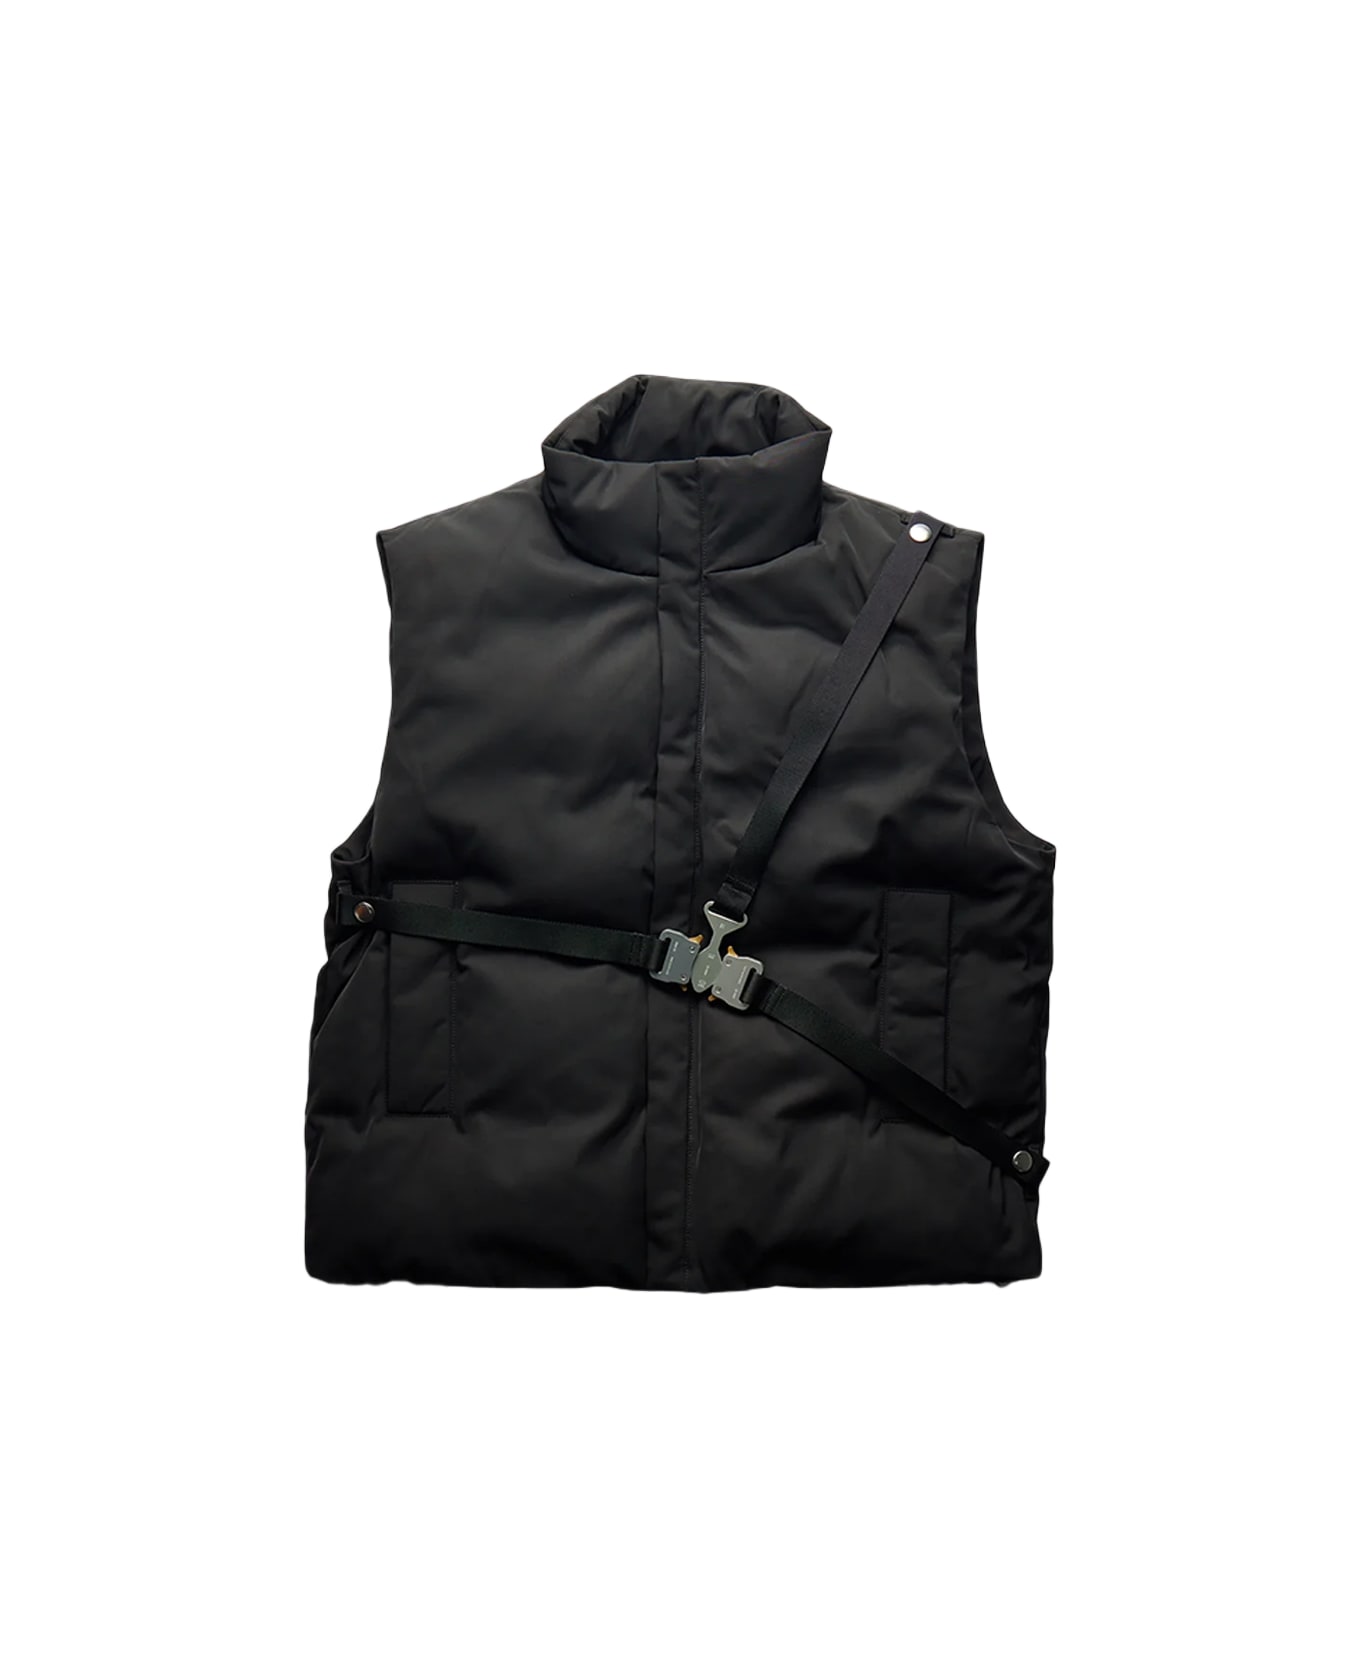 1017 ALYX 9SM Tricon Vest - X Black nylon vest with buckle - Tricon vest X - Nero